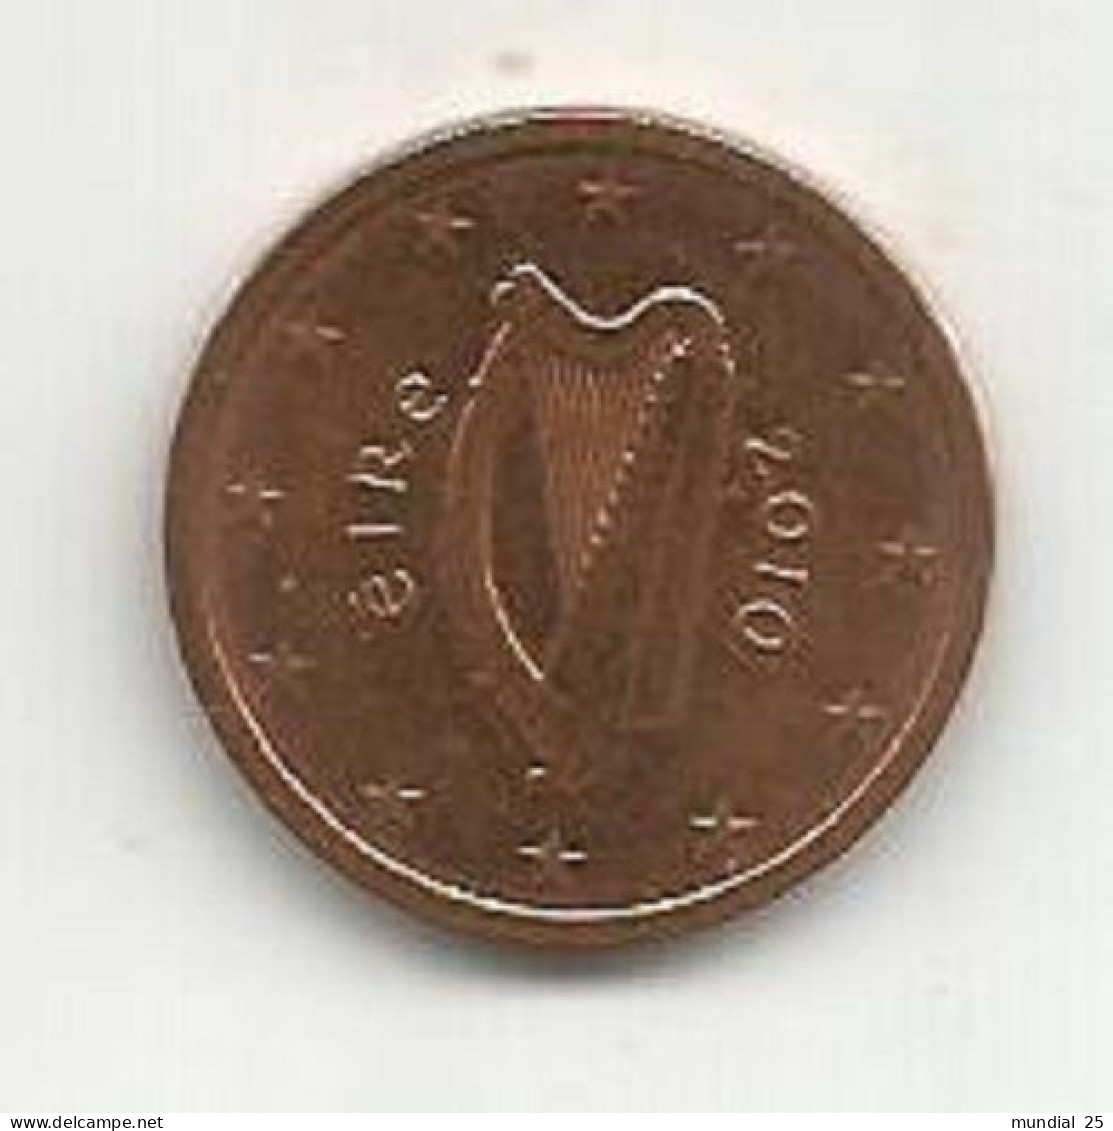 IRELAND 2 EURO CENT 2010 - Irlande